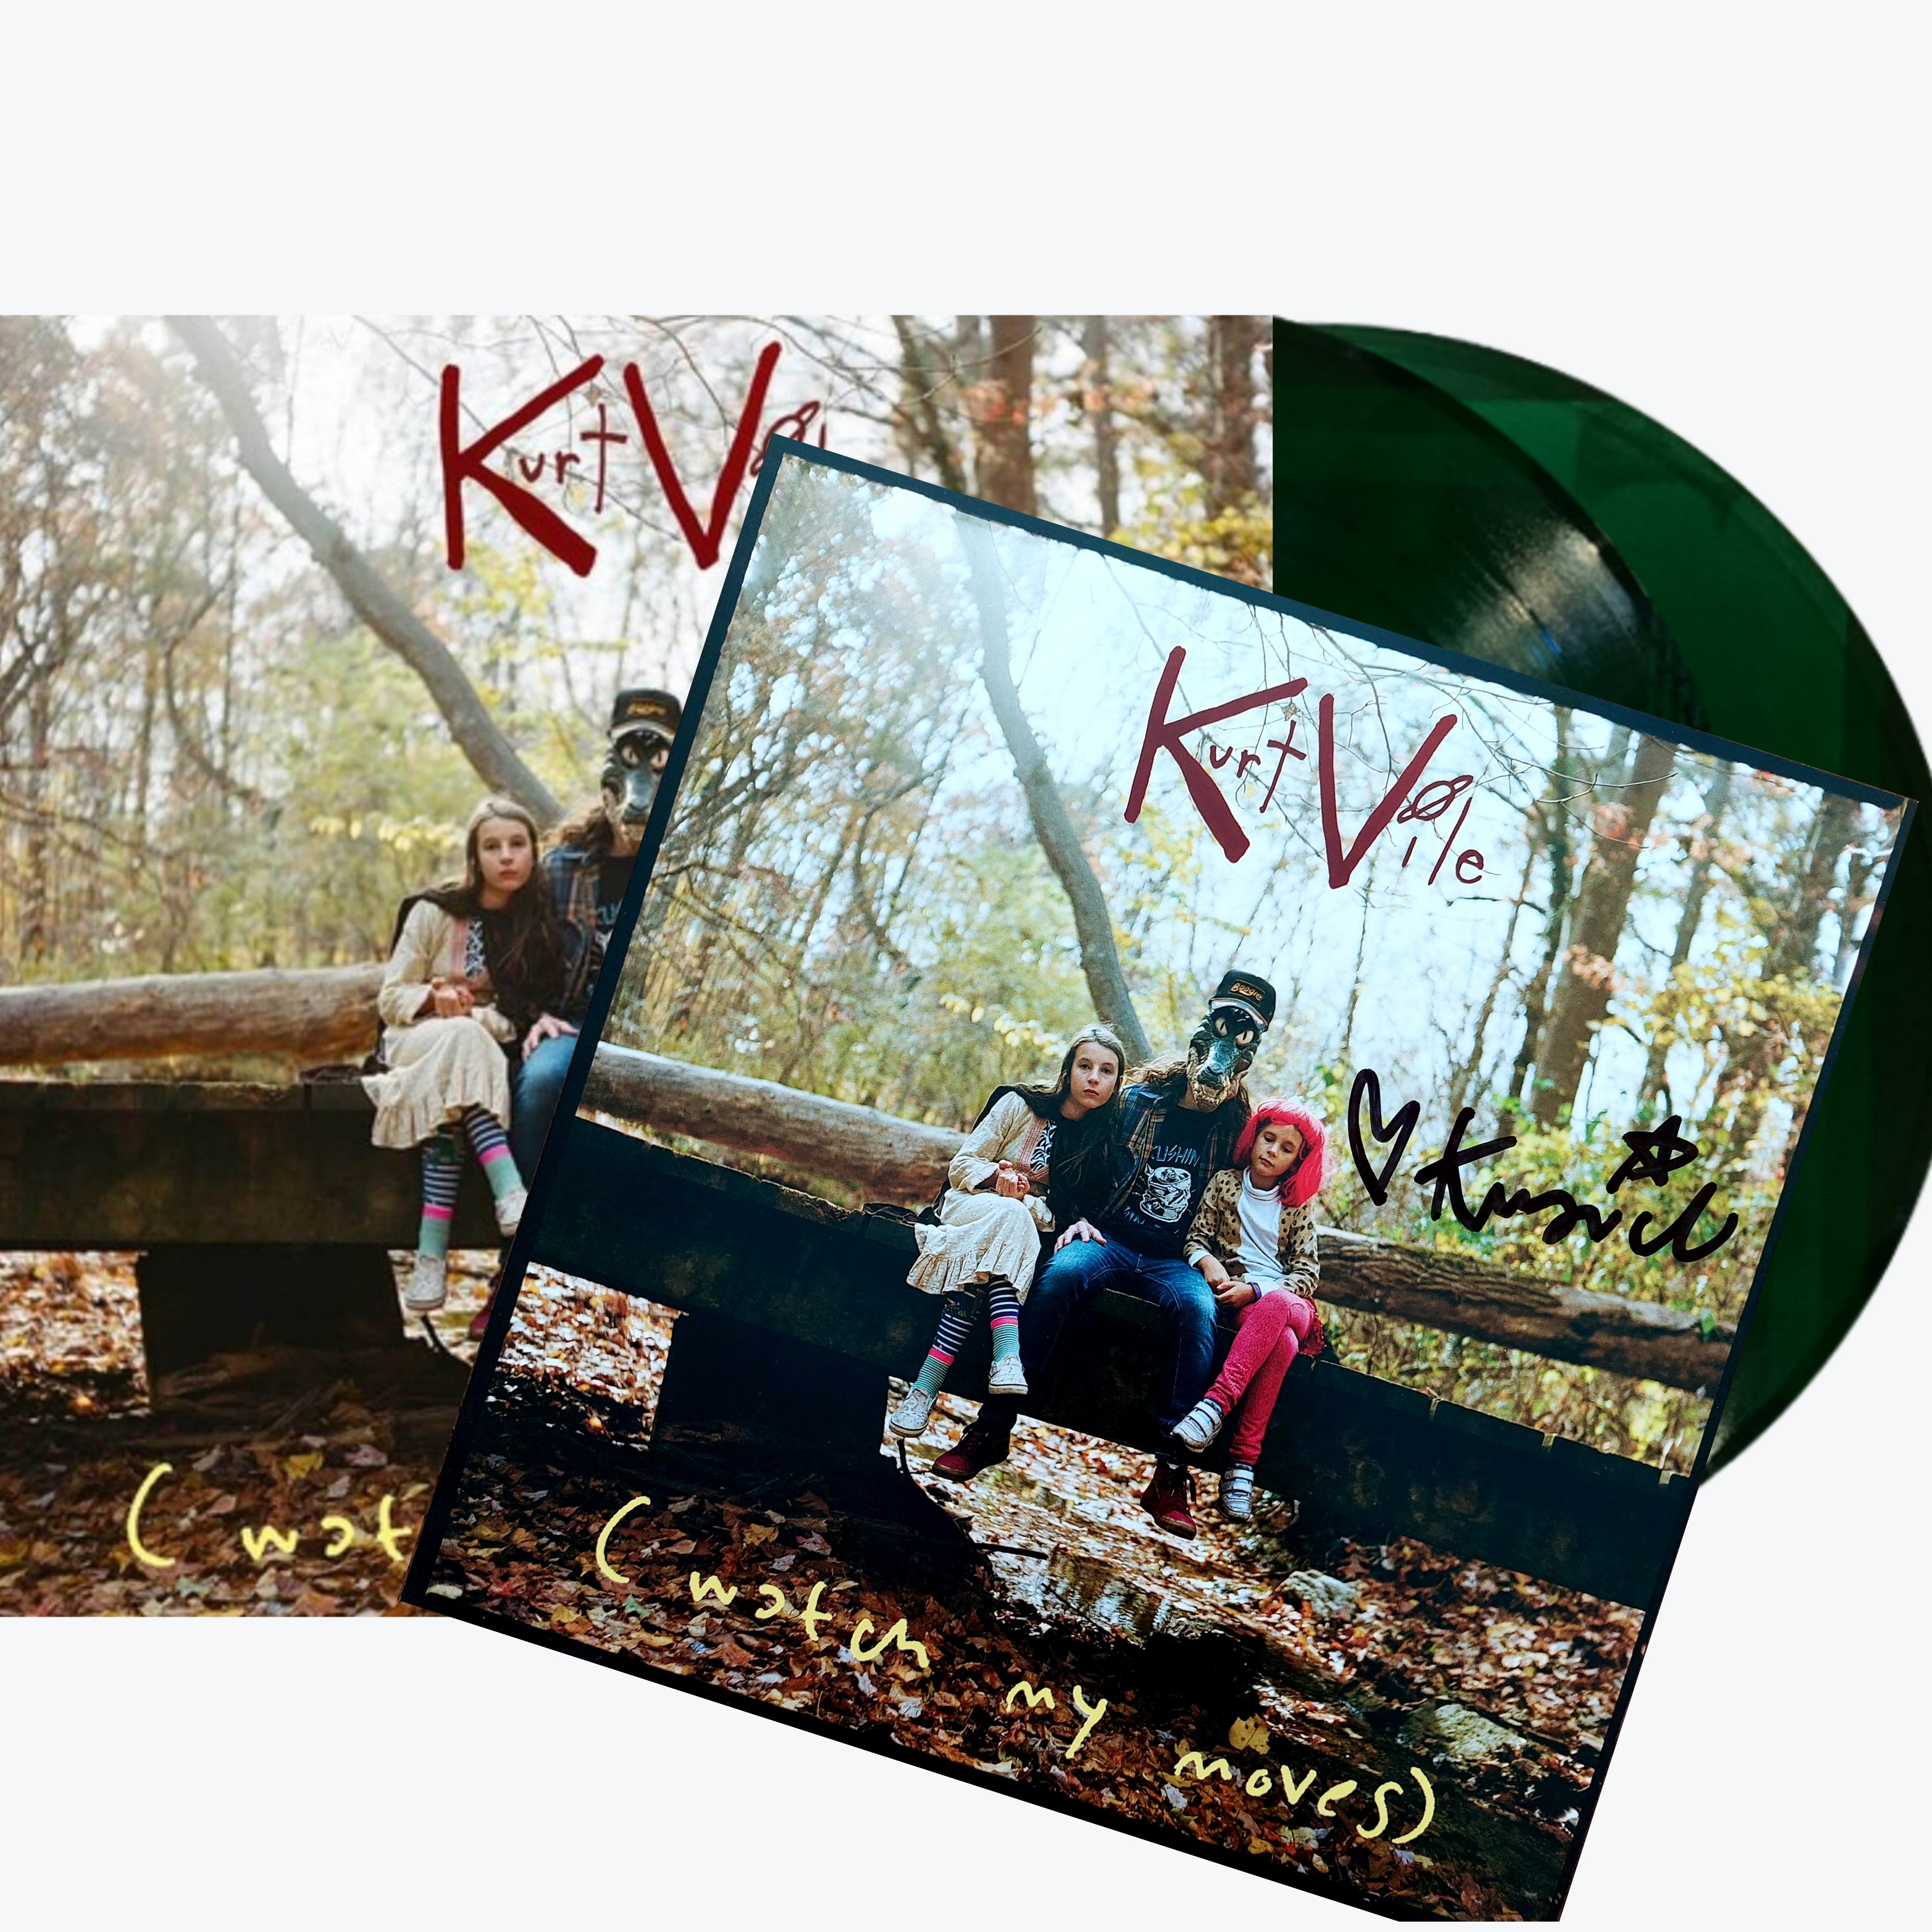 Kurt Vile Watch My Moves - Signed Translucent Green Vinyl 2xLP – Rubber-Duckee